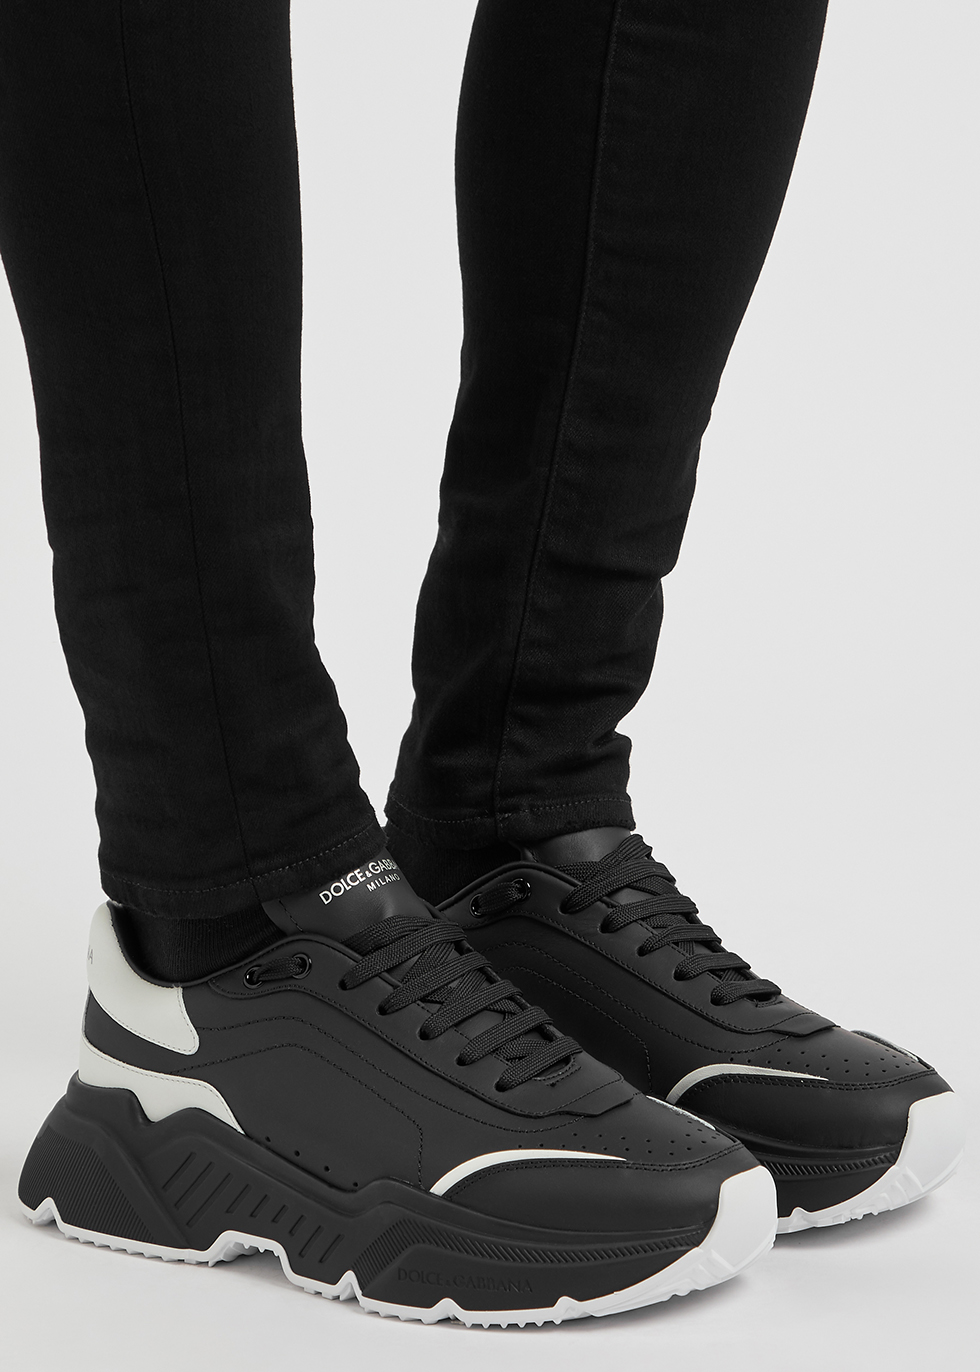 Dolce & Gabbana Daymaster black leather sneakers - Harvey Nichols